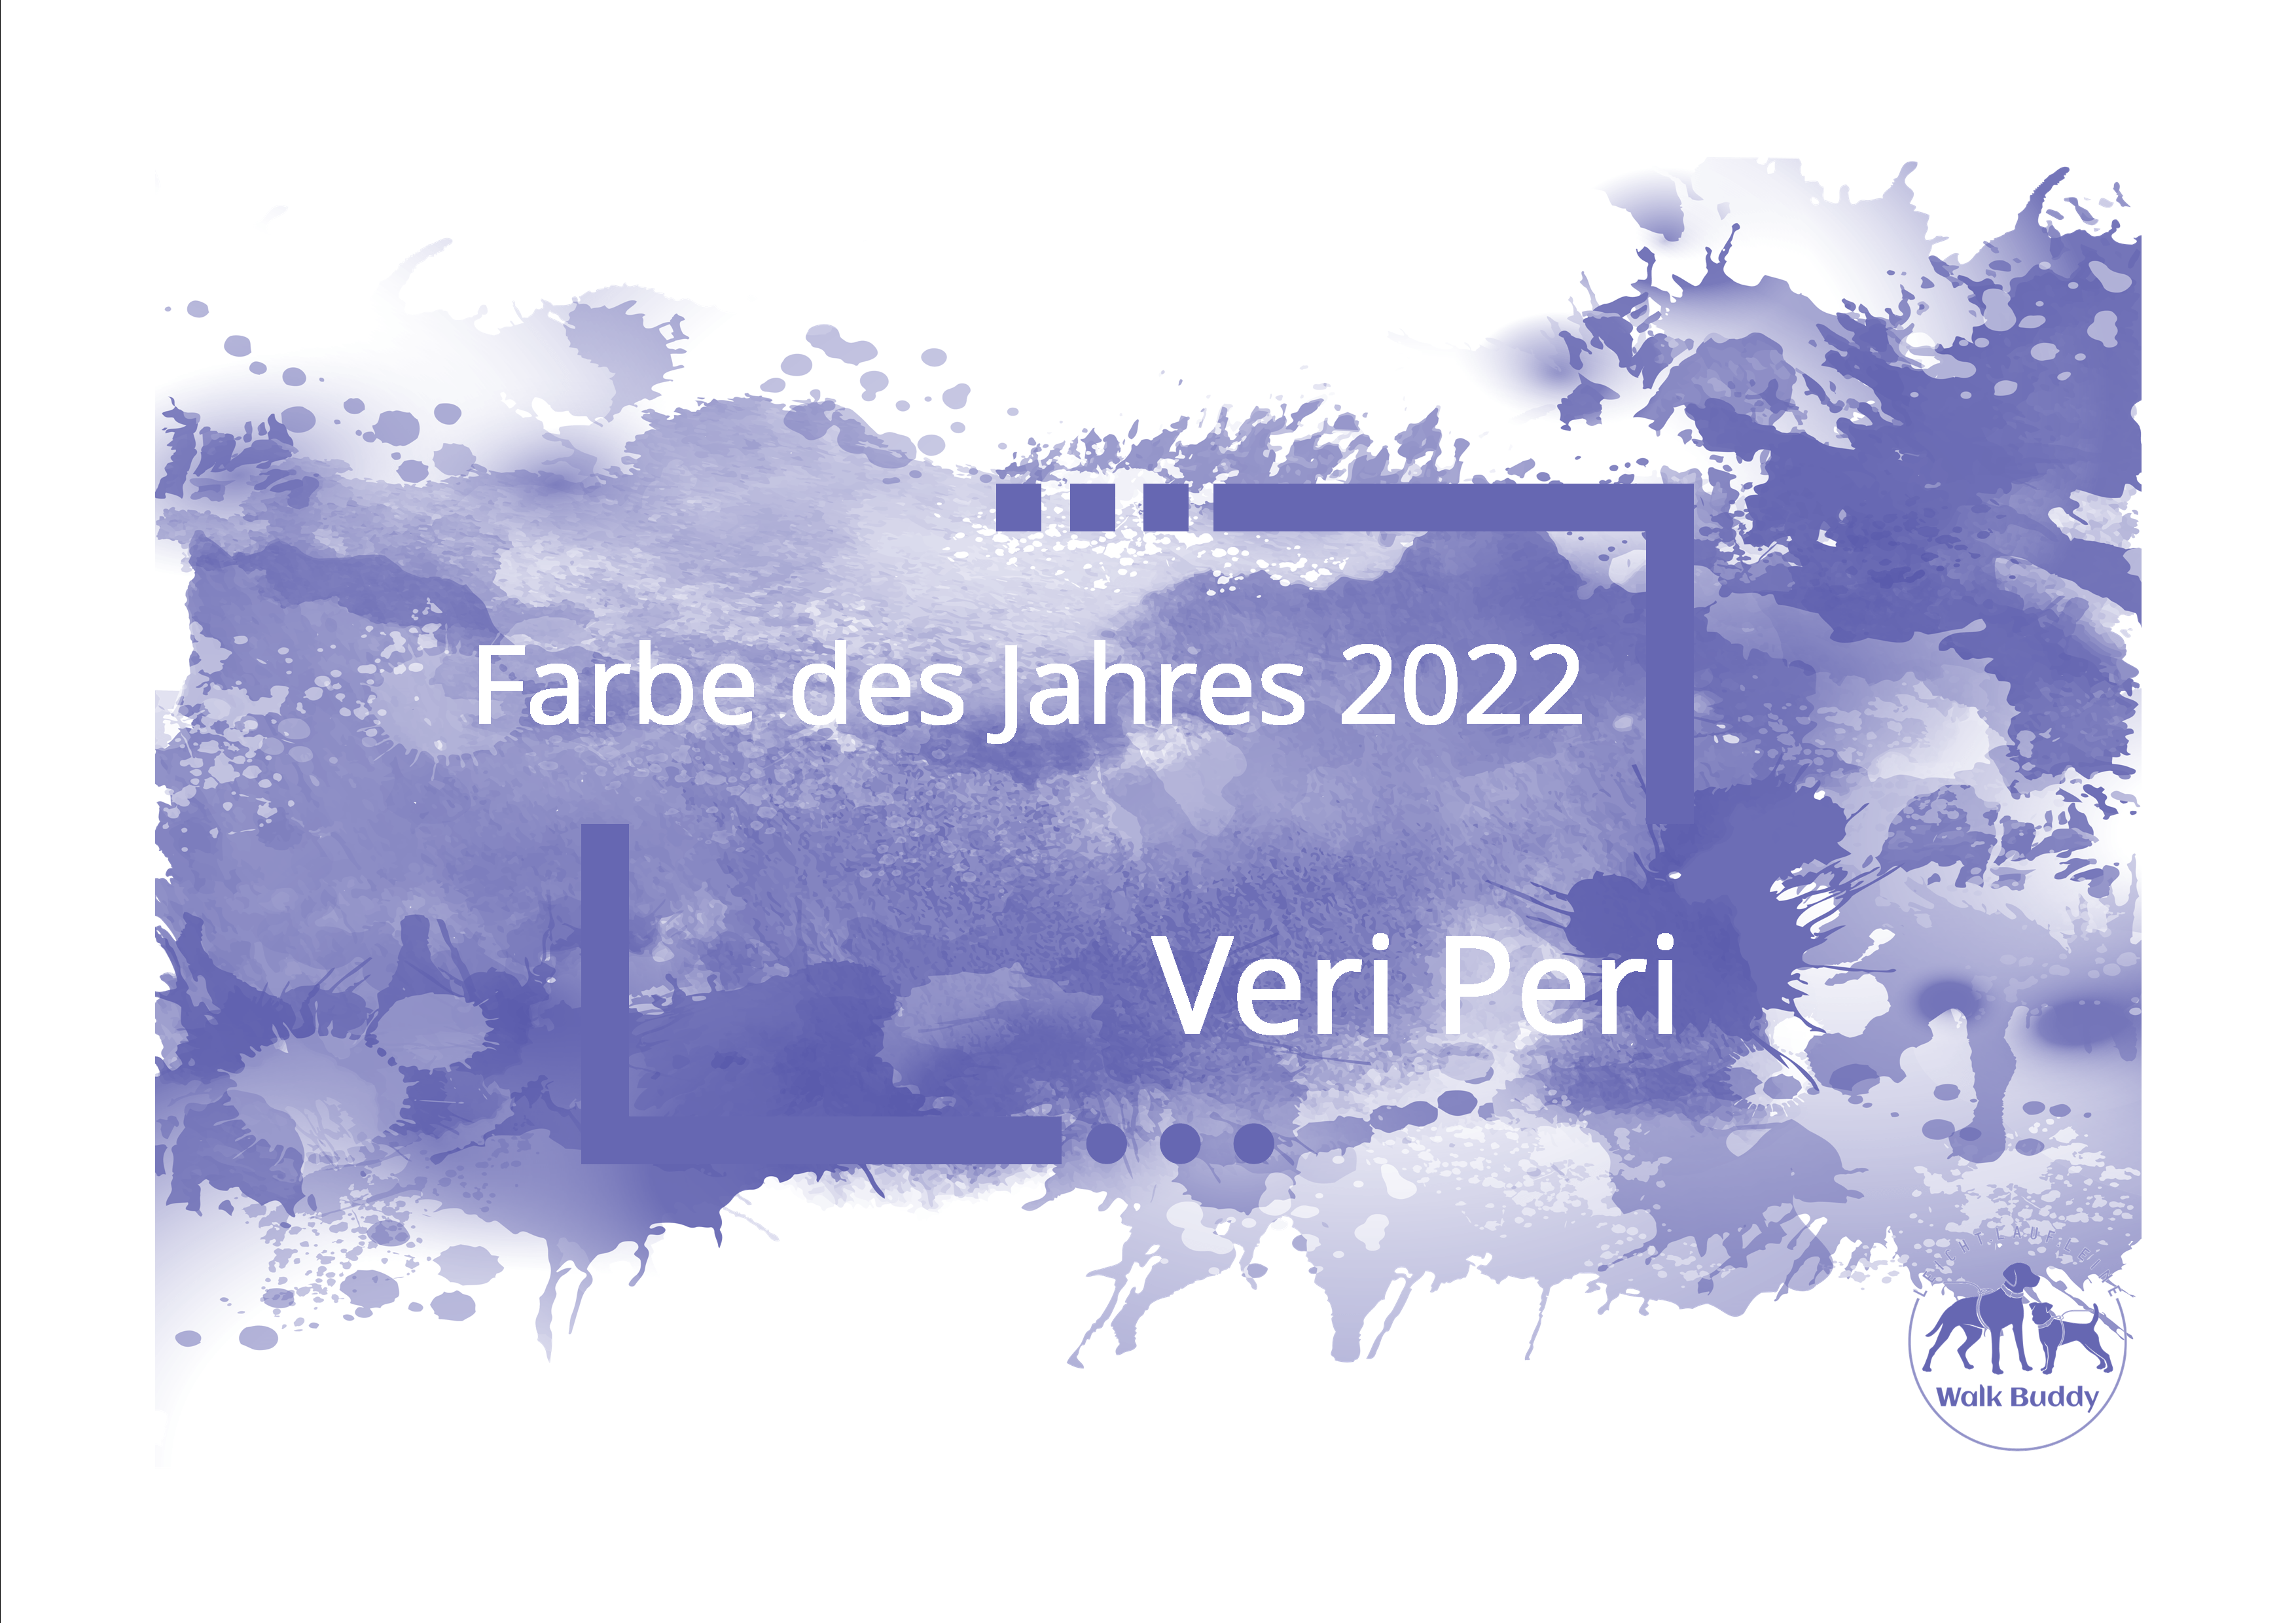 Farbe des Jahres 2022